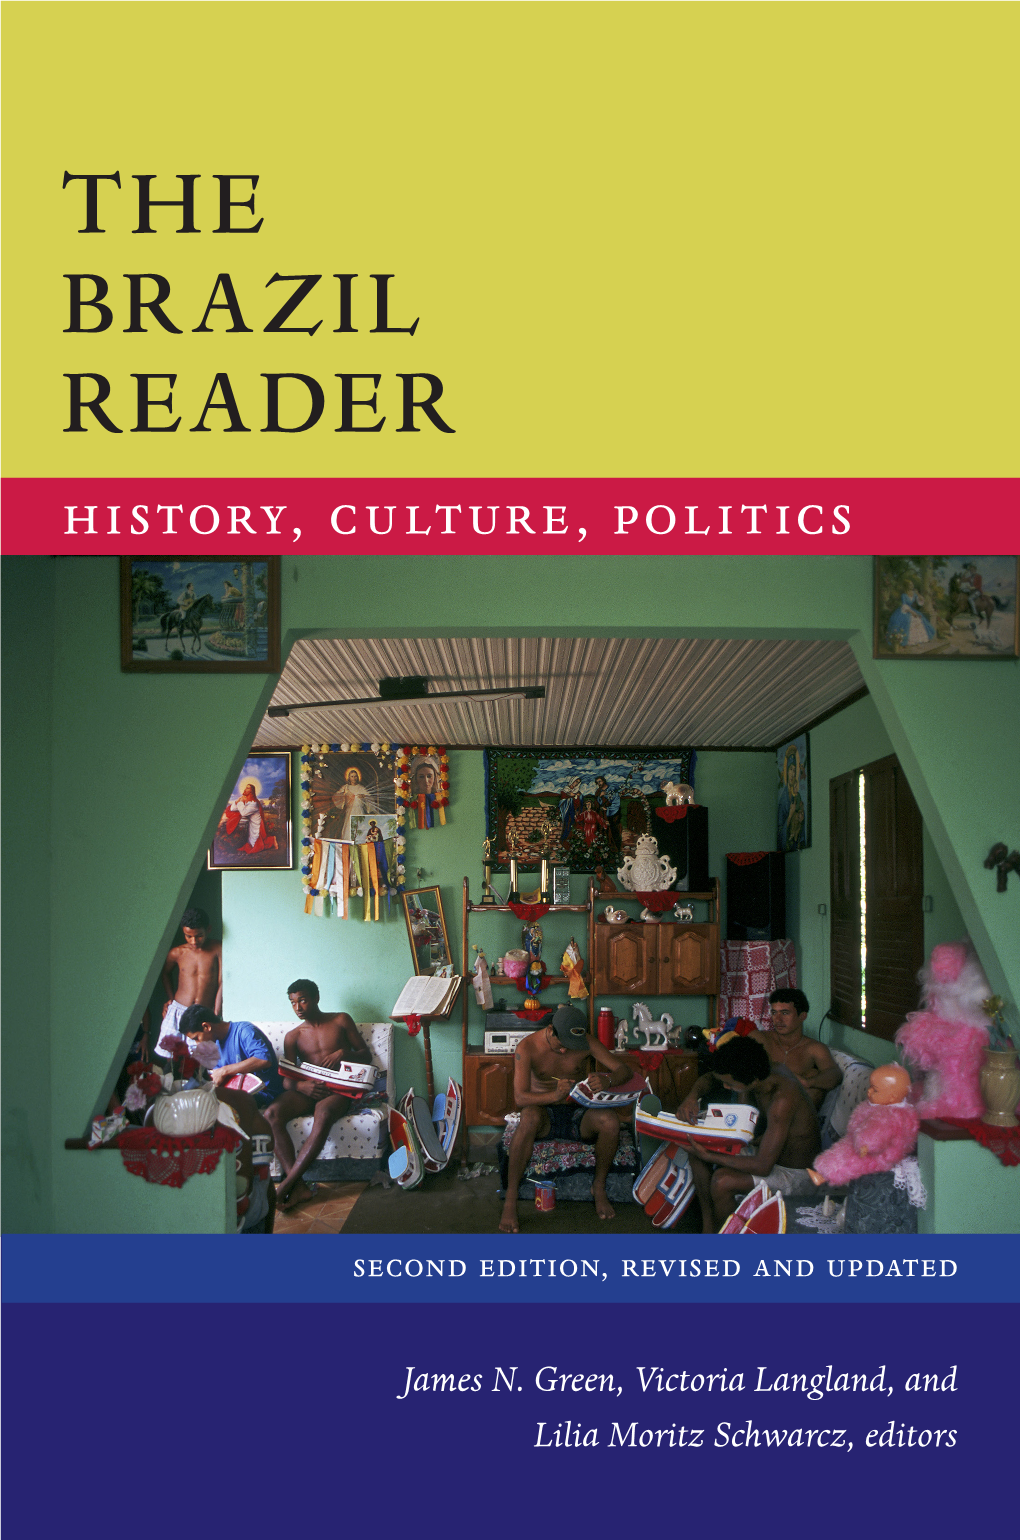 THE BRAZIL READER History, Culture, Politics